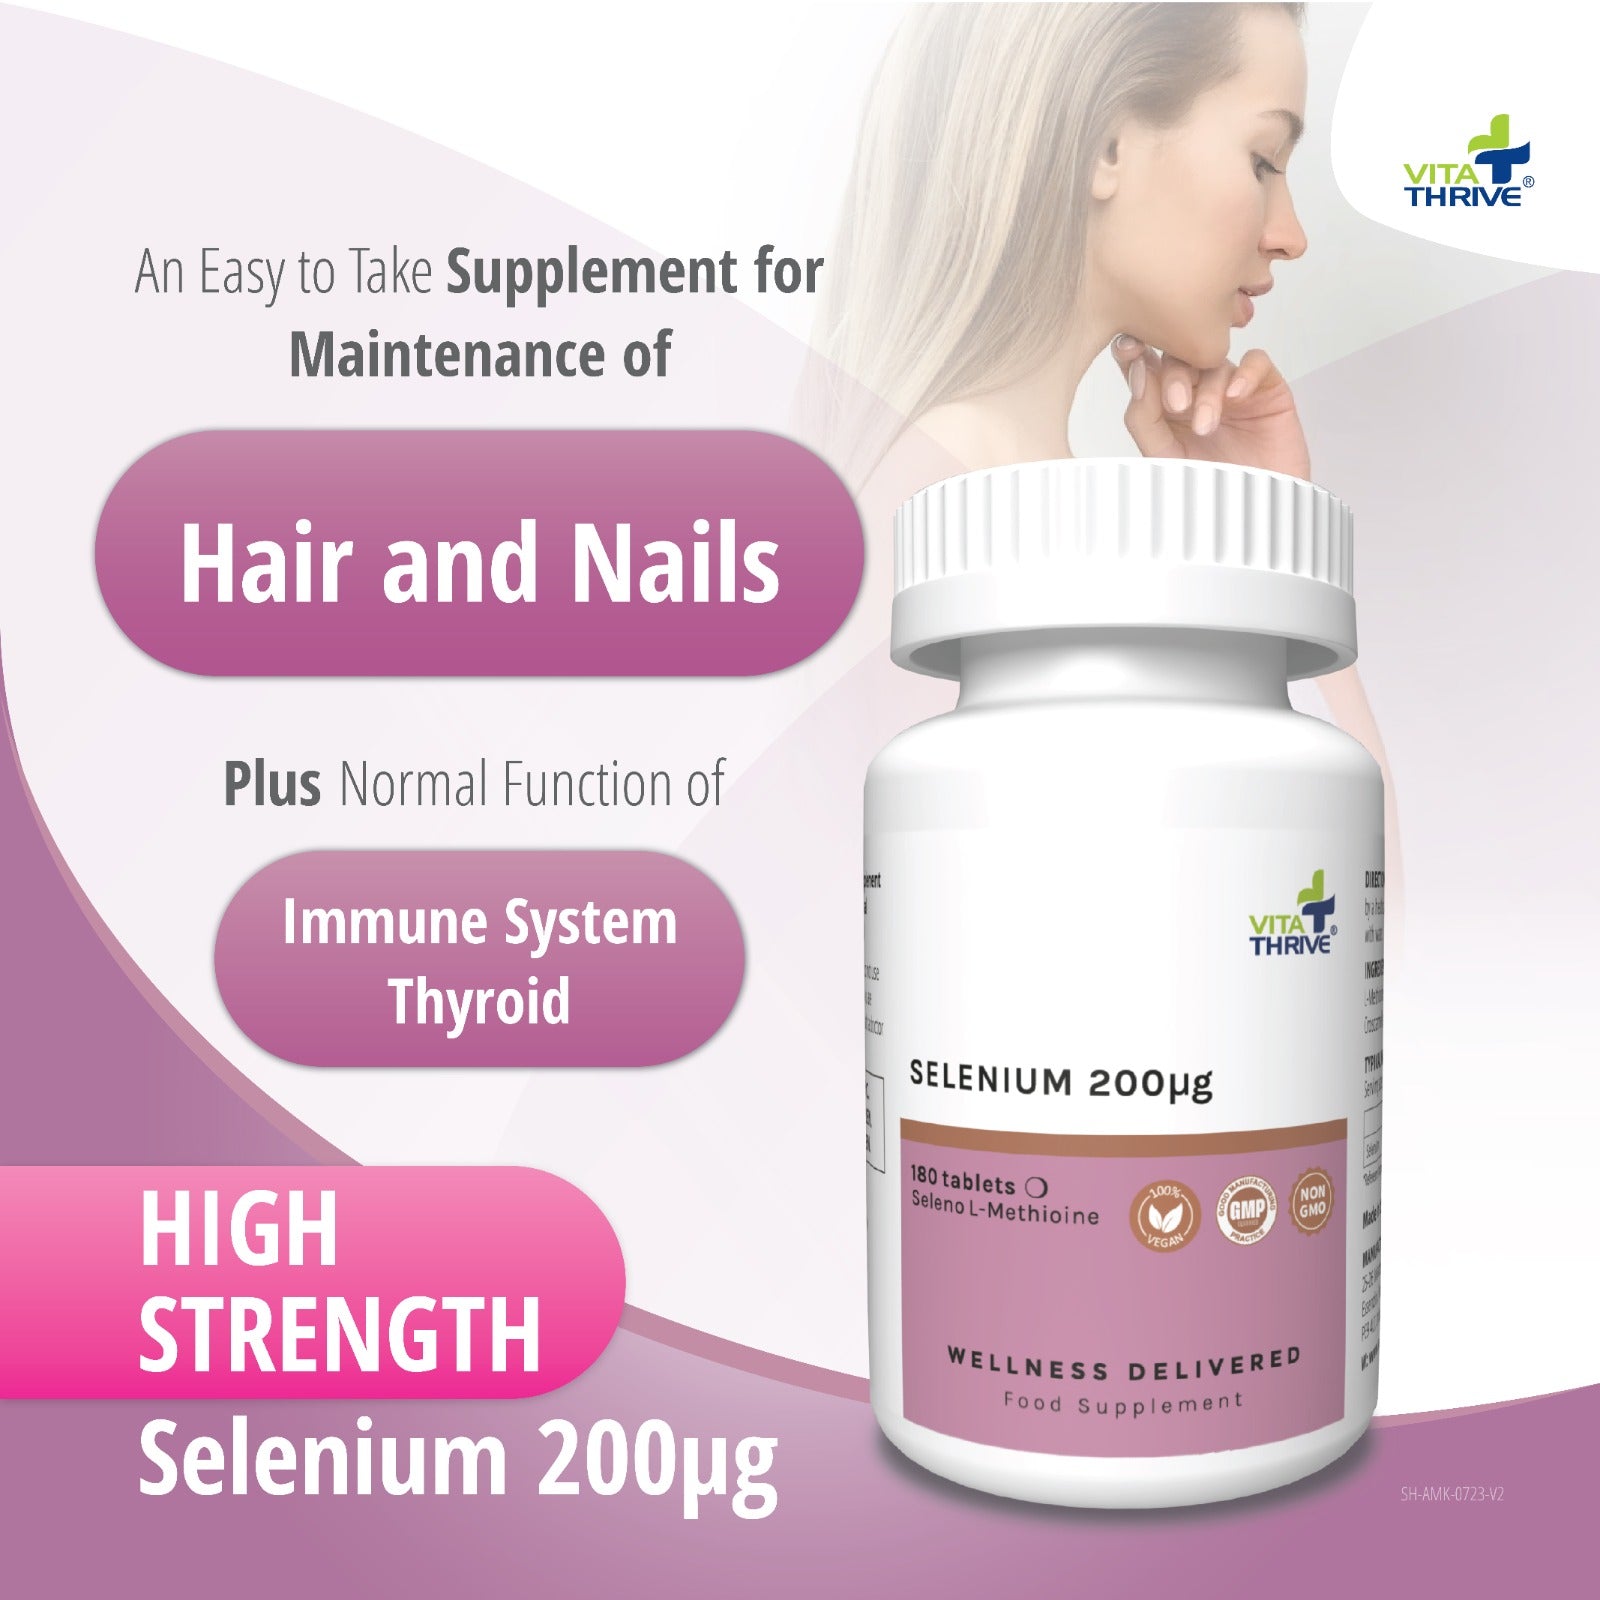 VitaThrive® Selenium 200µg - 180 Tablets